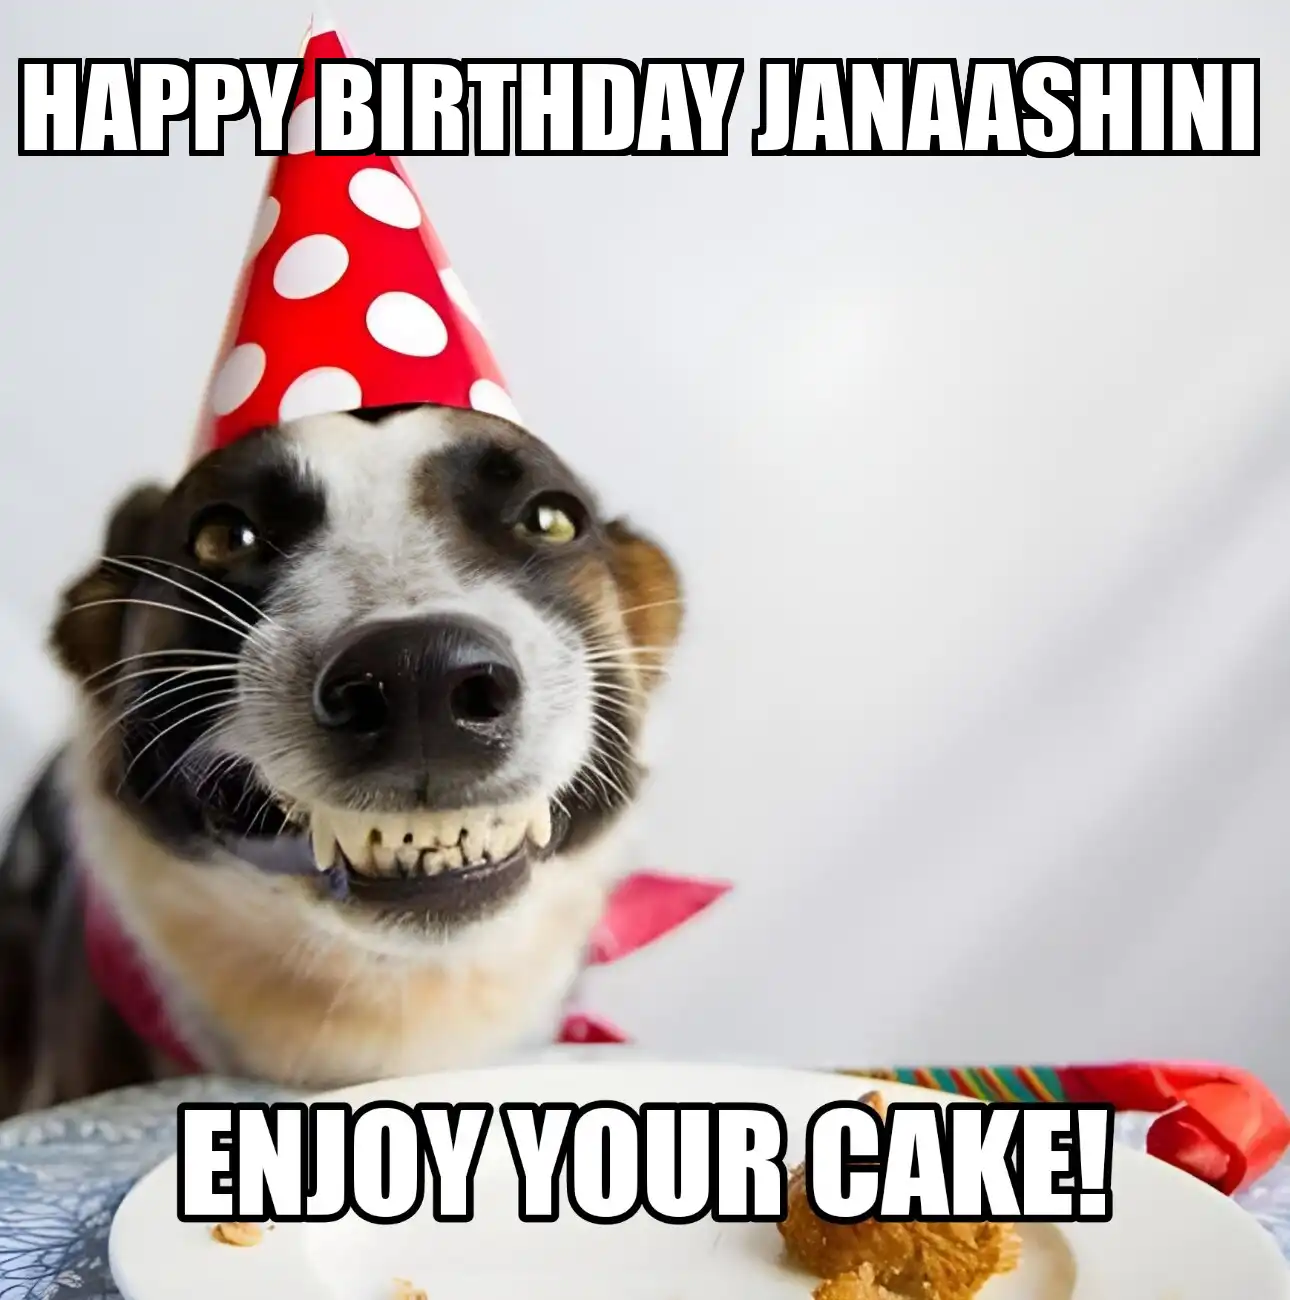 Happy Birthday Janaashini Enjoy Your Cake Dog Meme